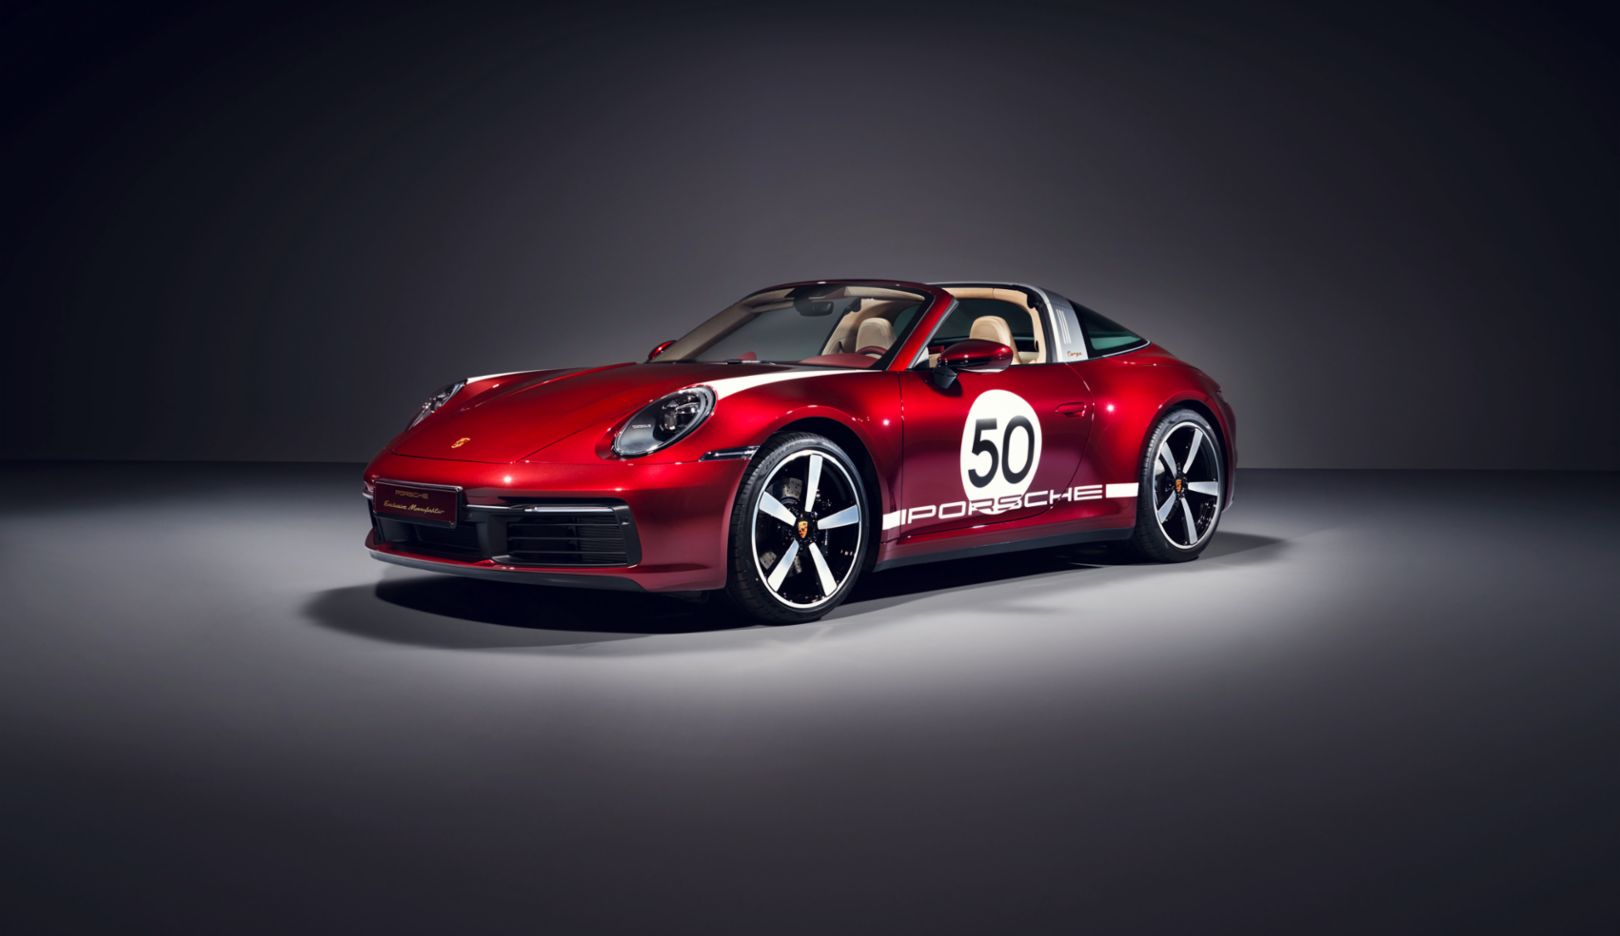 Virtual World Premiere: The new Porsche 911 Targa